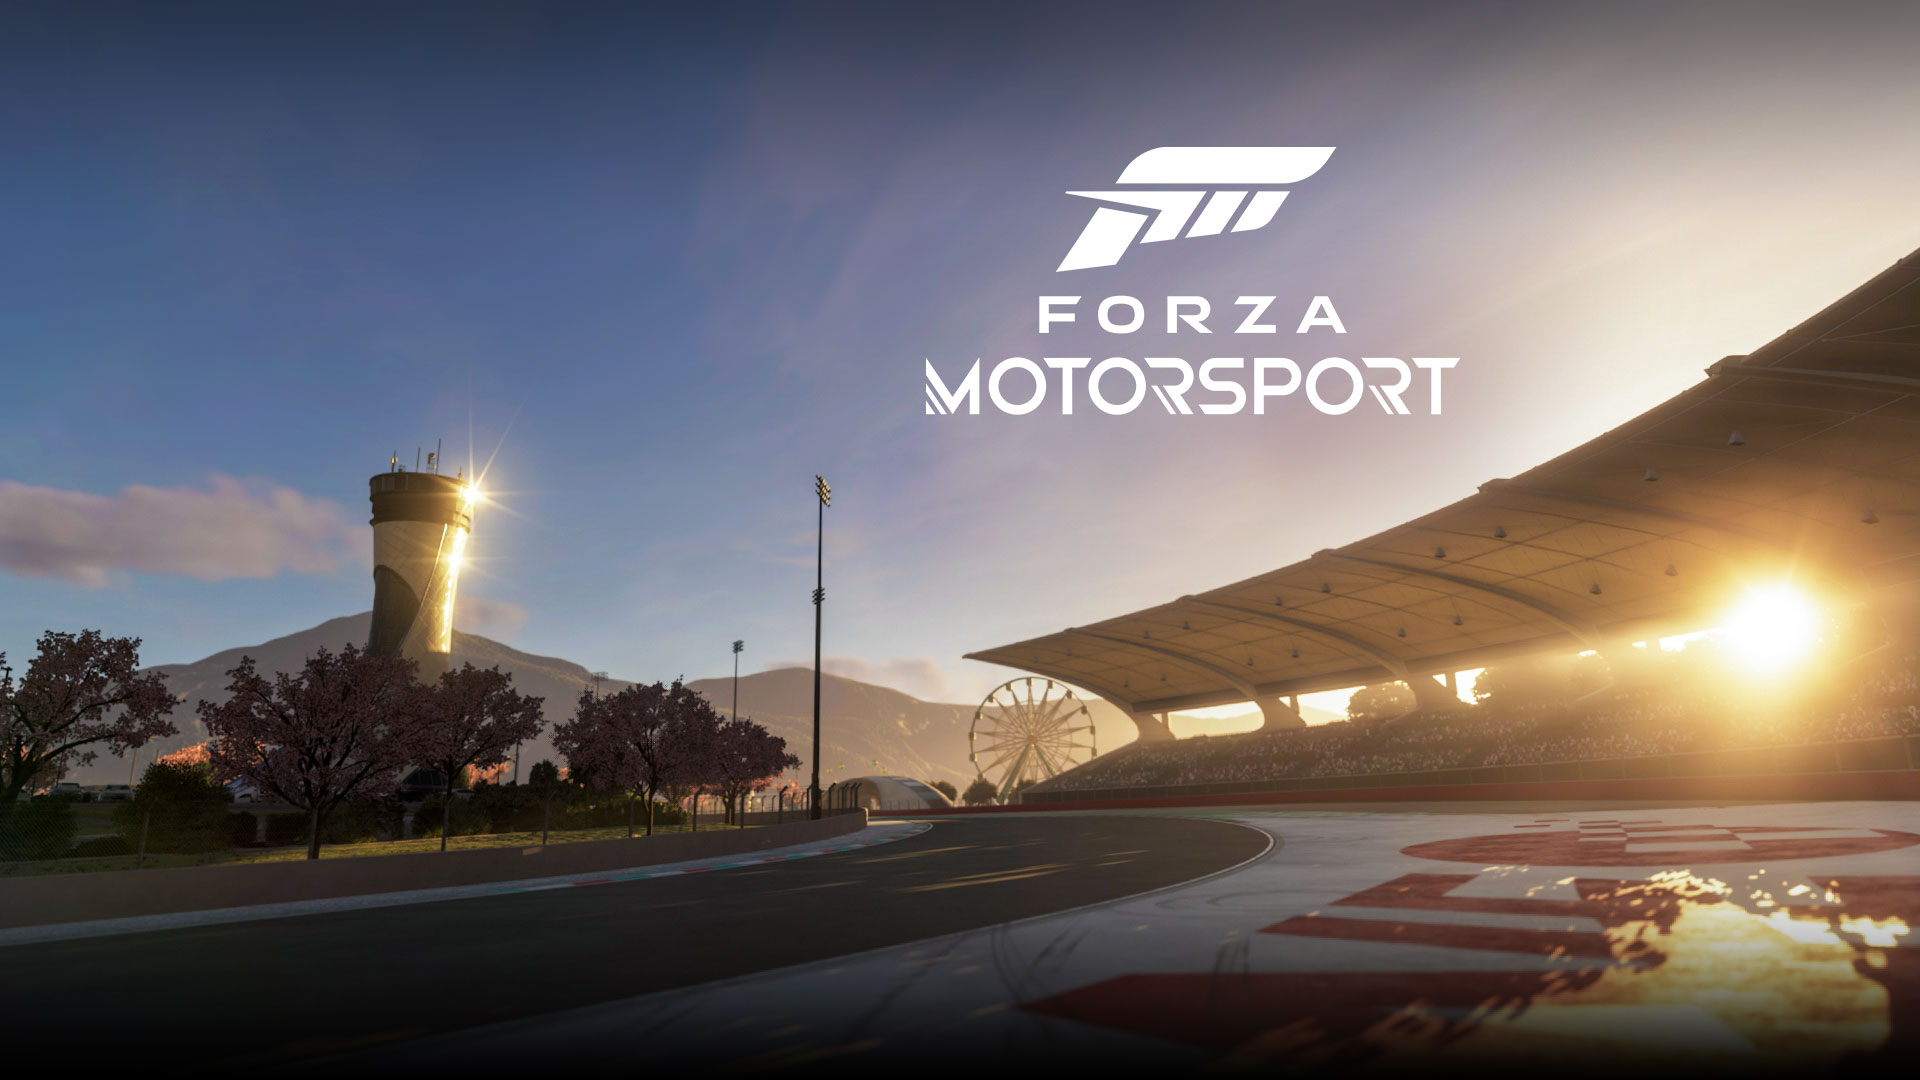 Forza Motorsport, Ο ήλιος που δύει λάμπει πάνω από την πίστα.